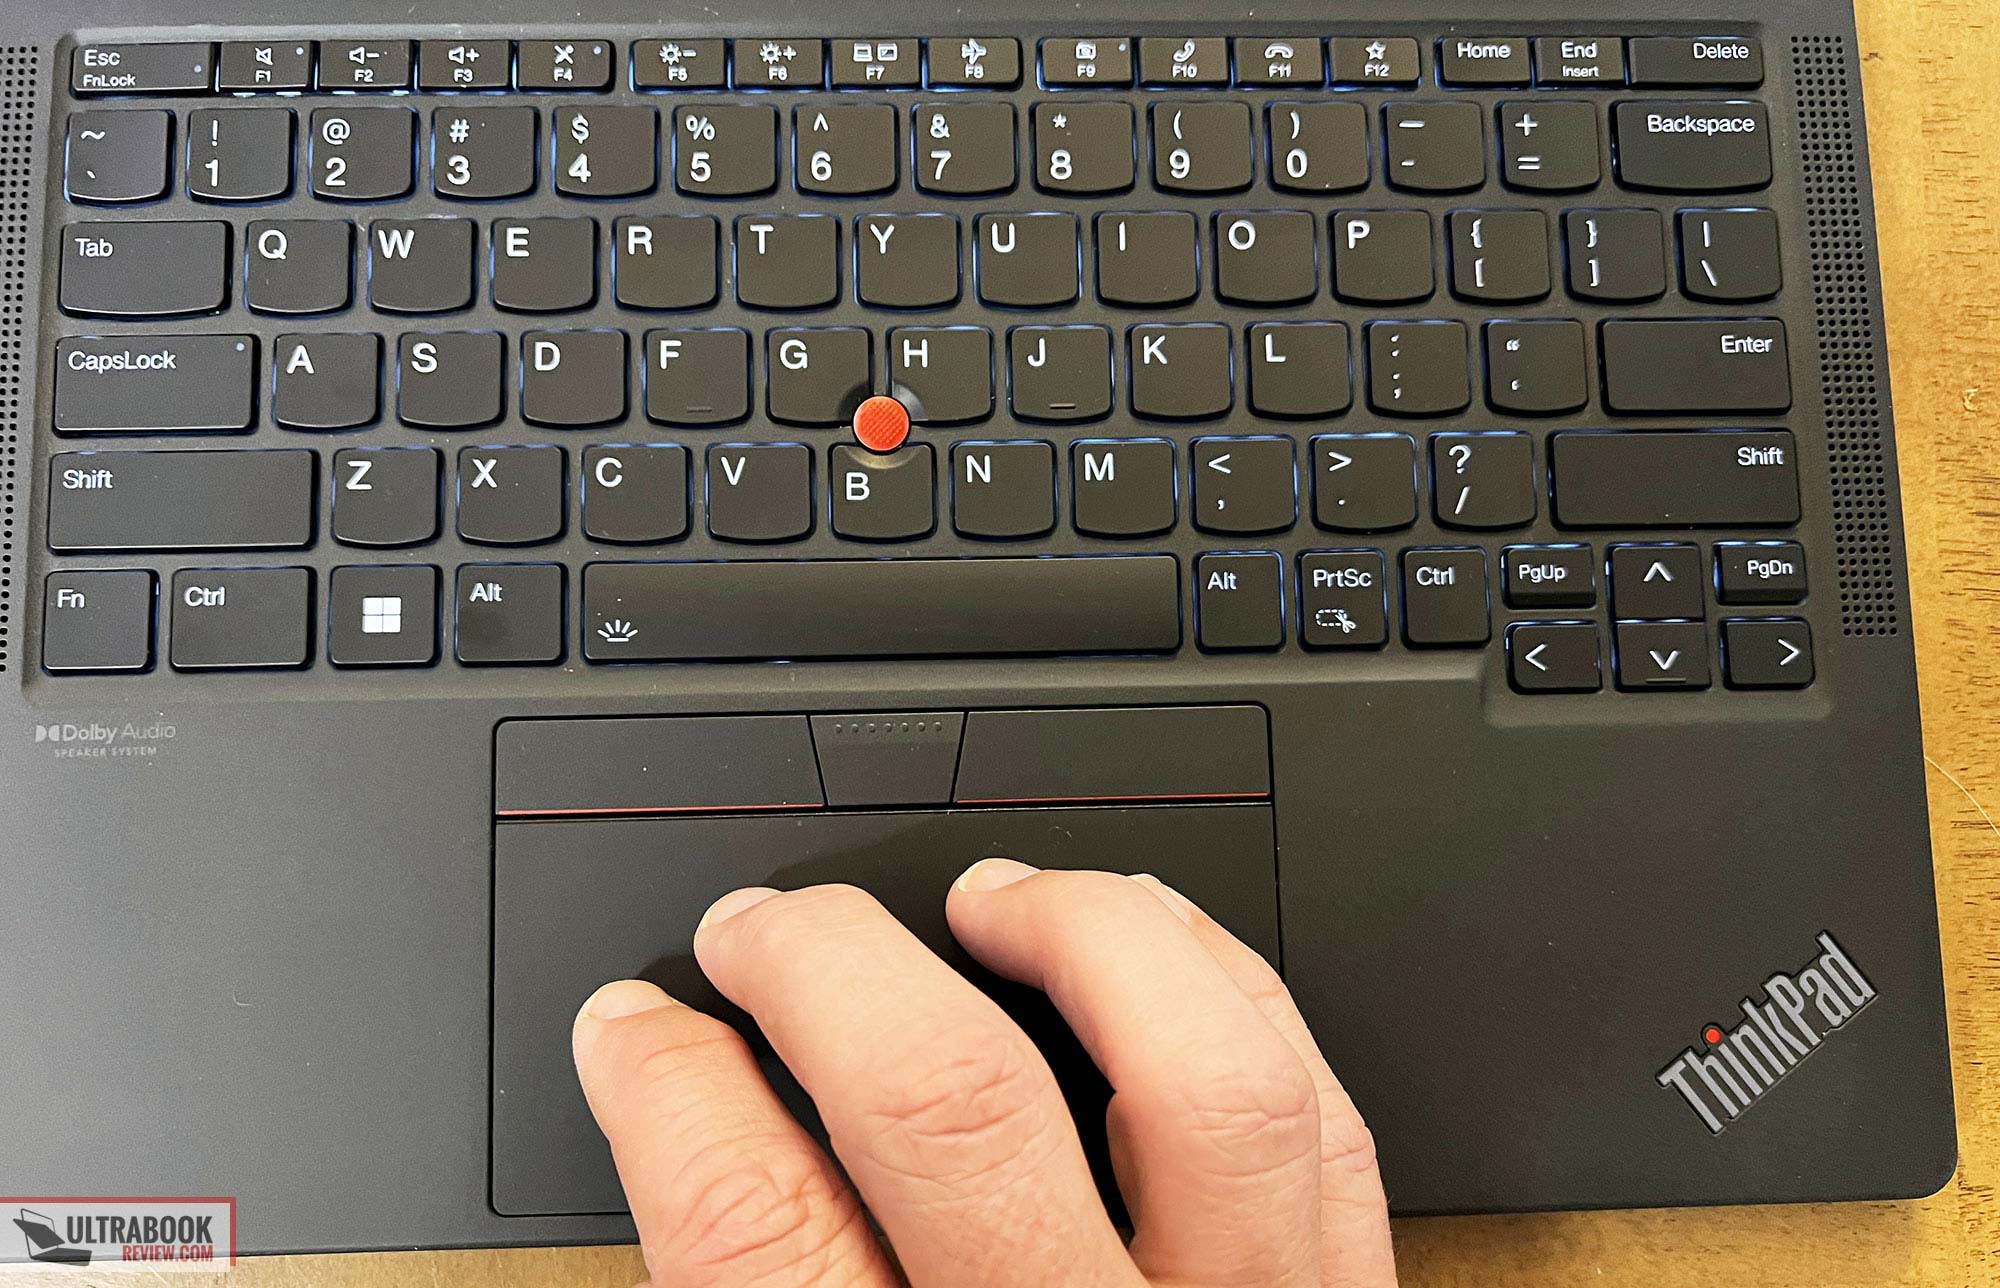 Lenovo ThinkPad X13s Review: Portable but sluggish - Reviewed